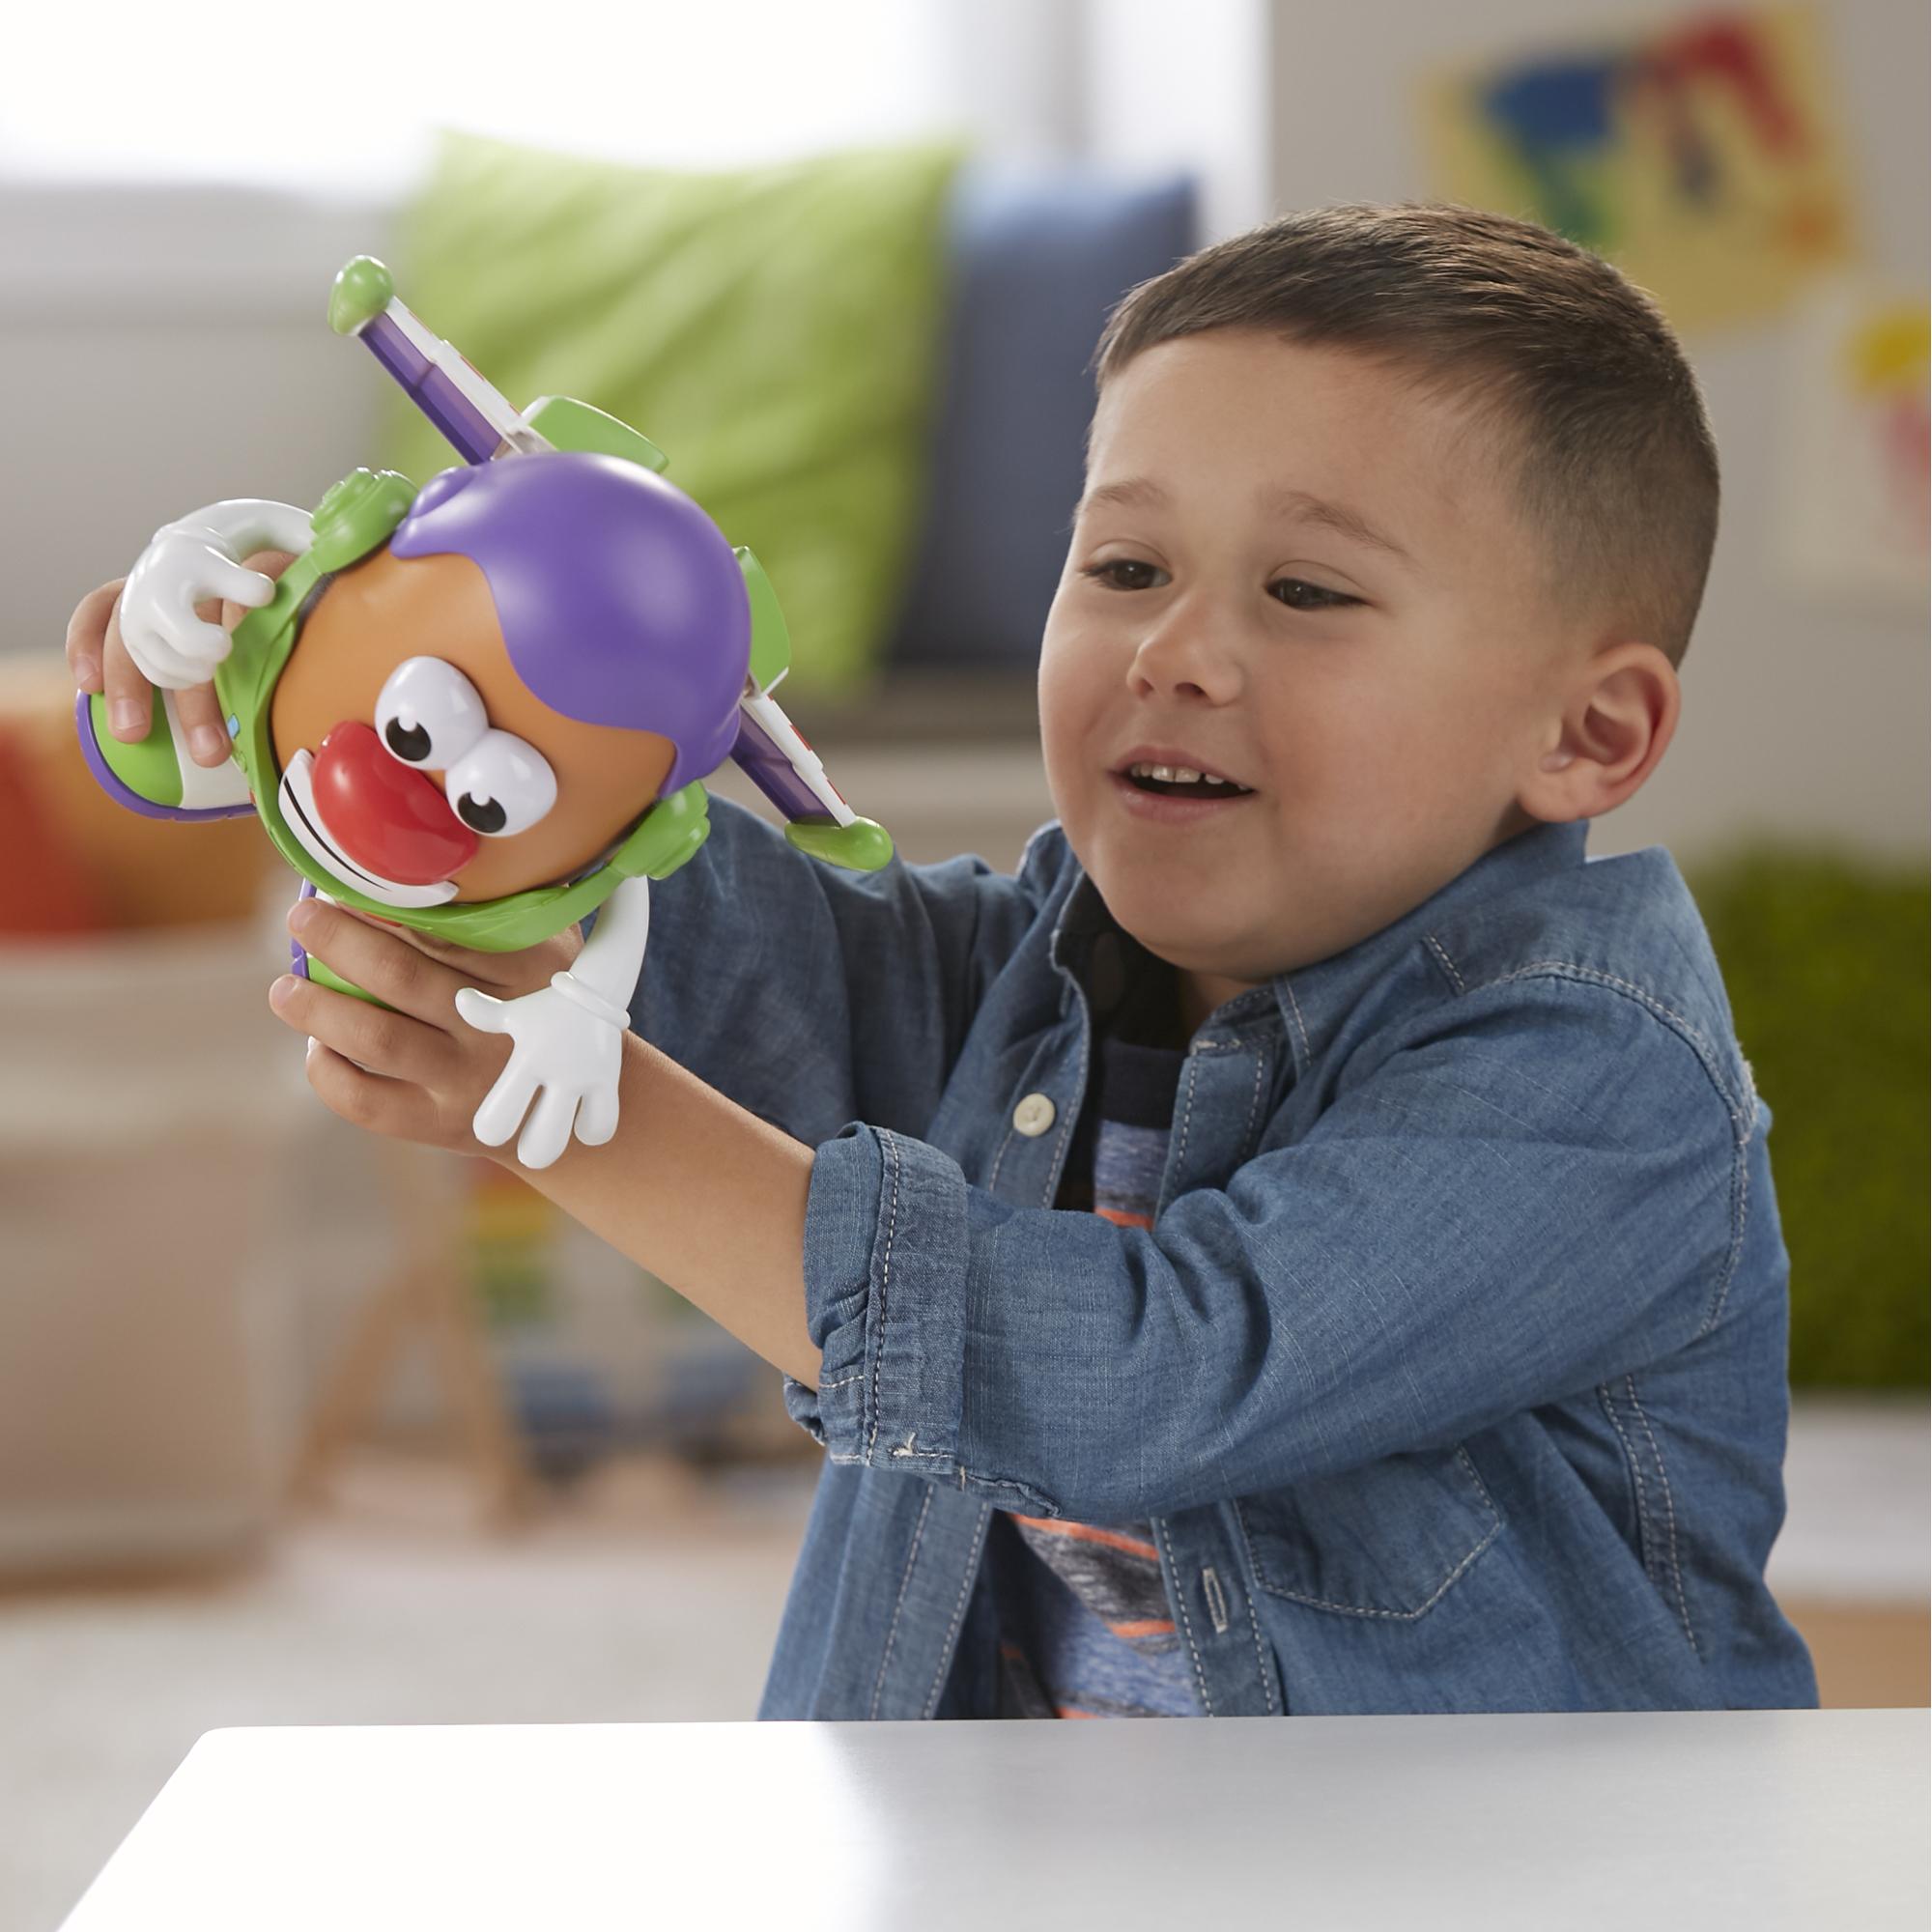 Details about   Mr Potato Head Disney/Pixar Toy Story 4 Buzz Lightyear Mini Figure Toy for Kids